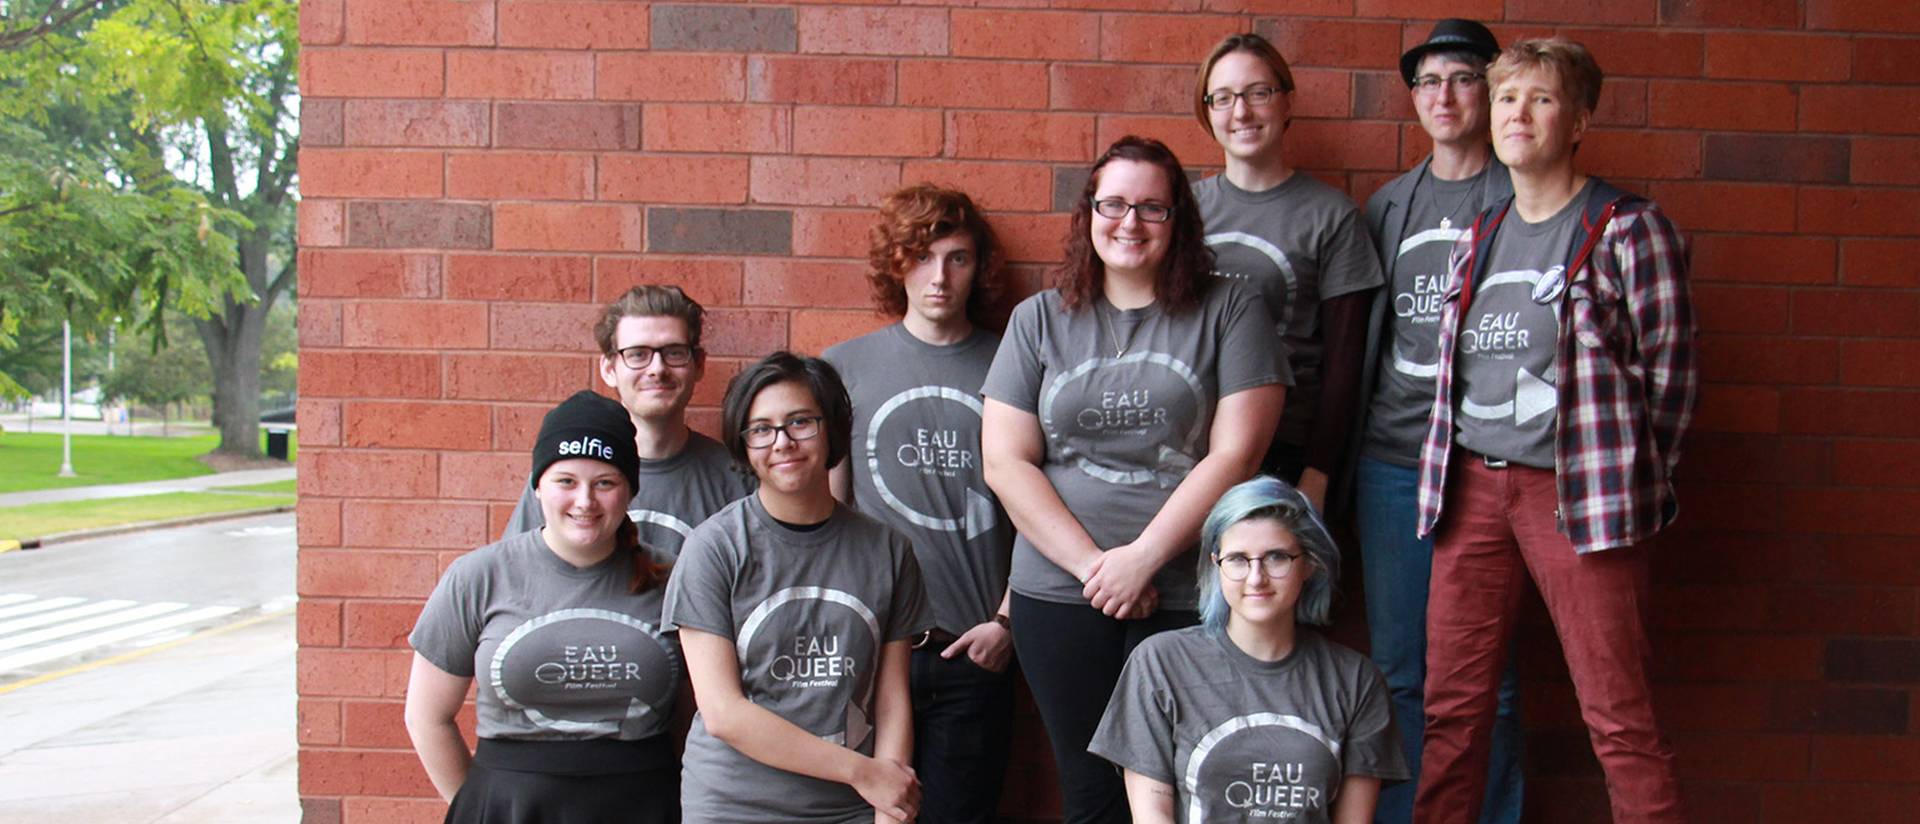 Eau Queer staff 2015